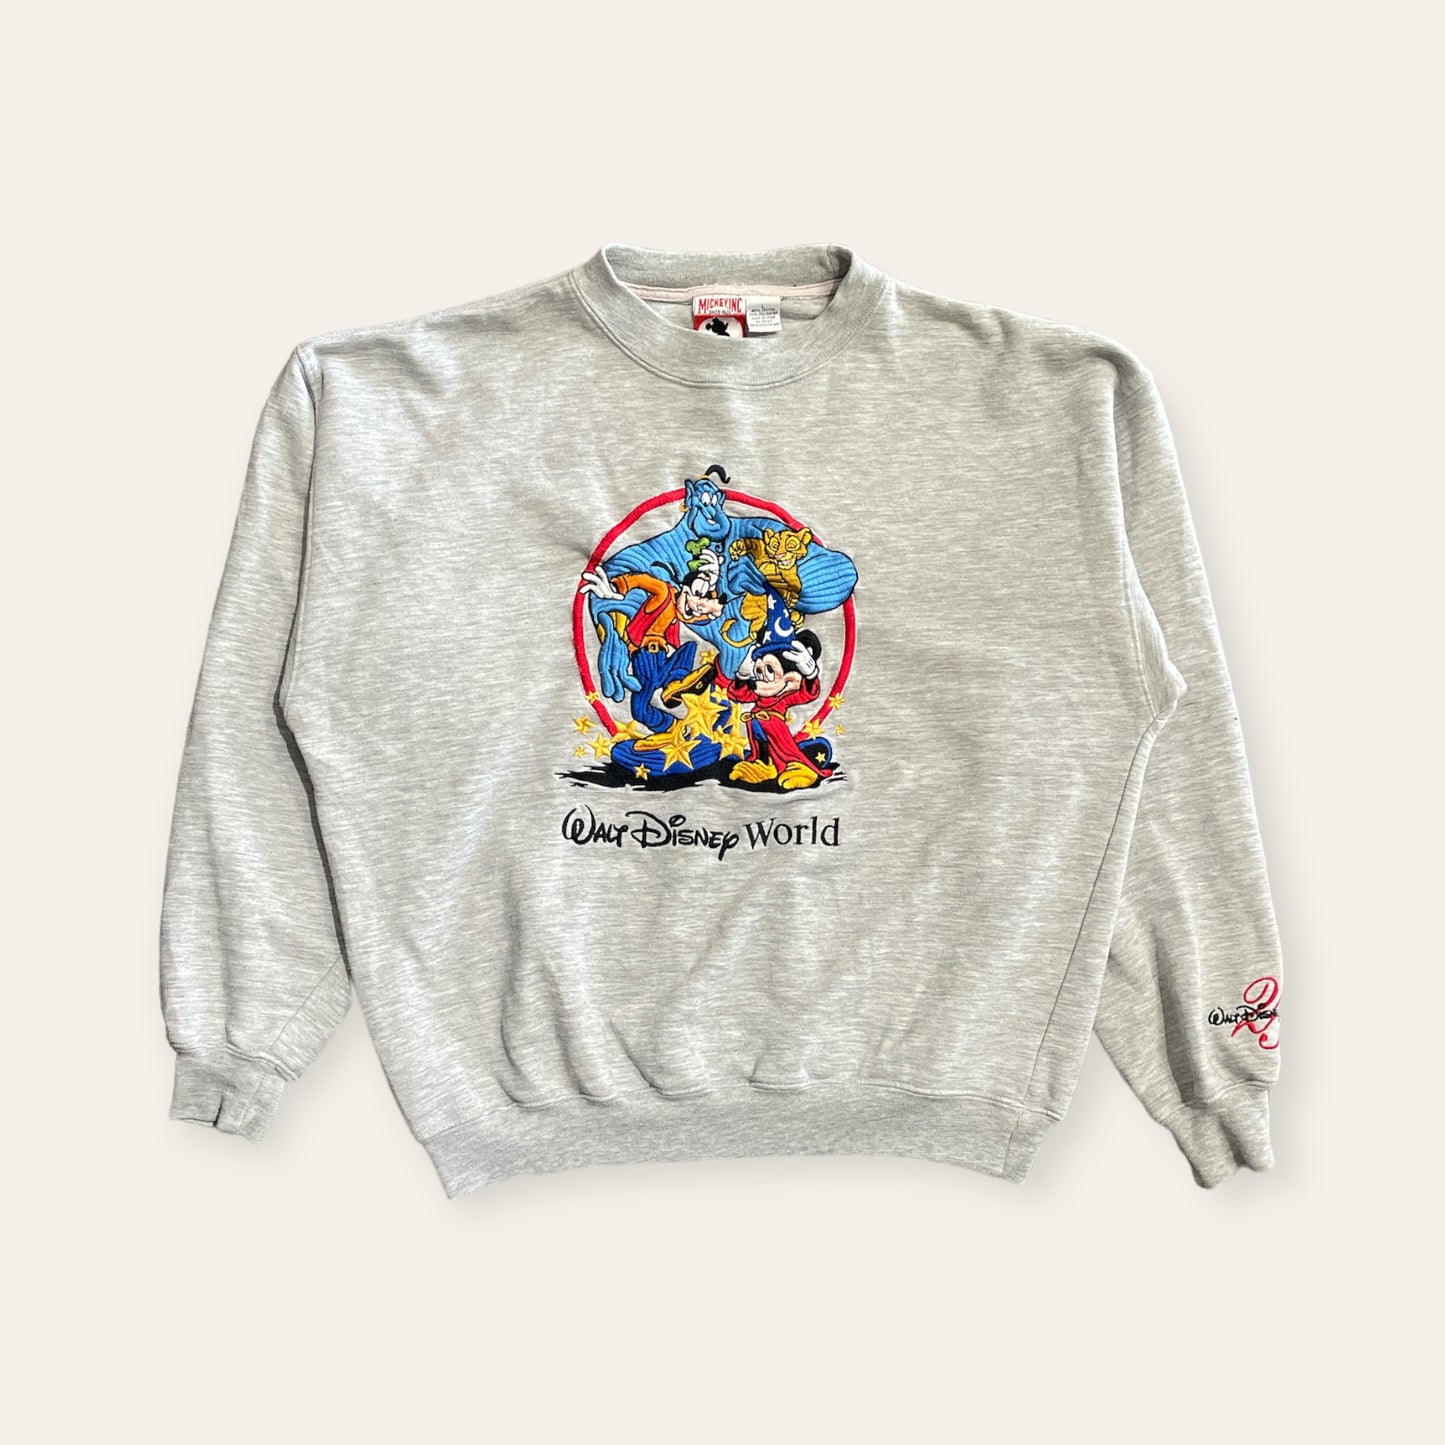 Vintage Disney Sweater Grey Size L